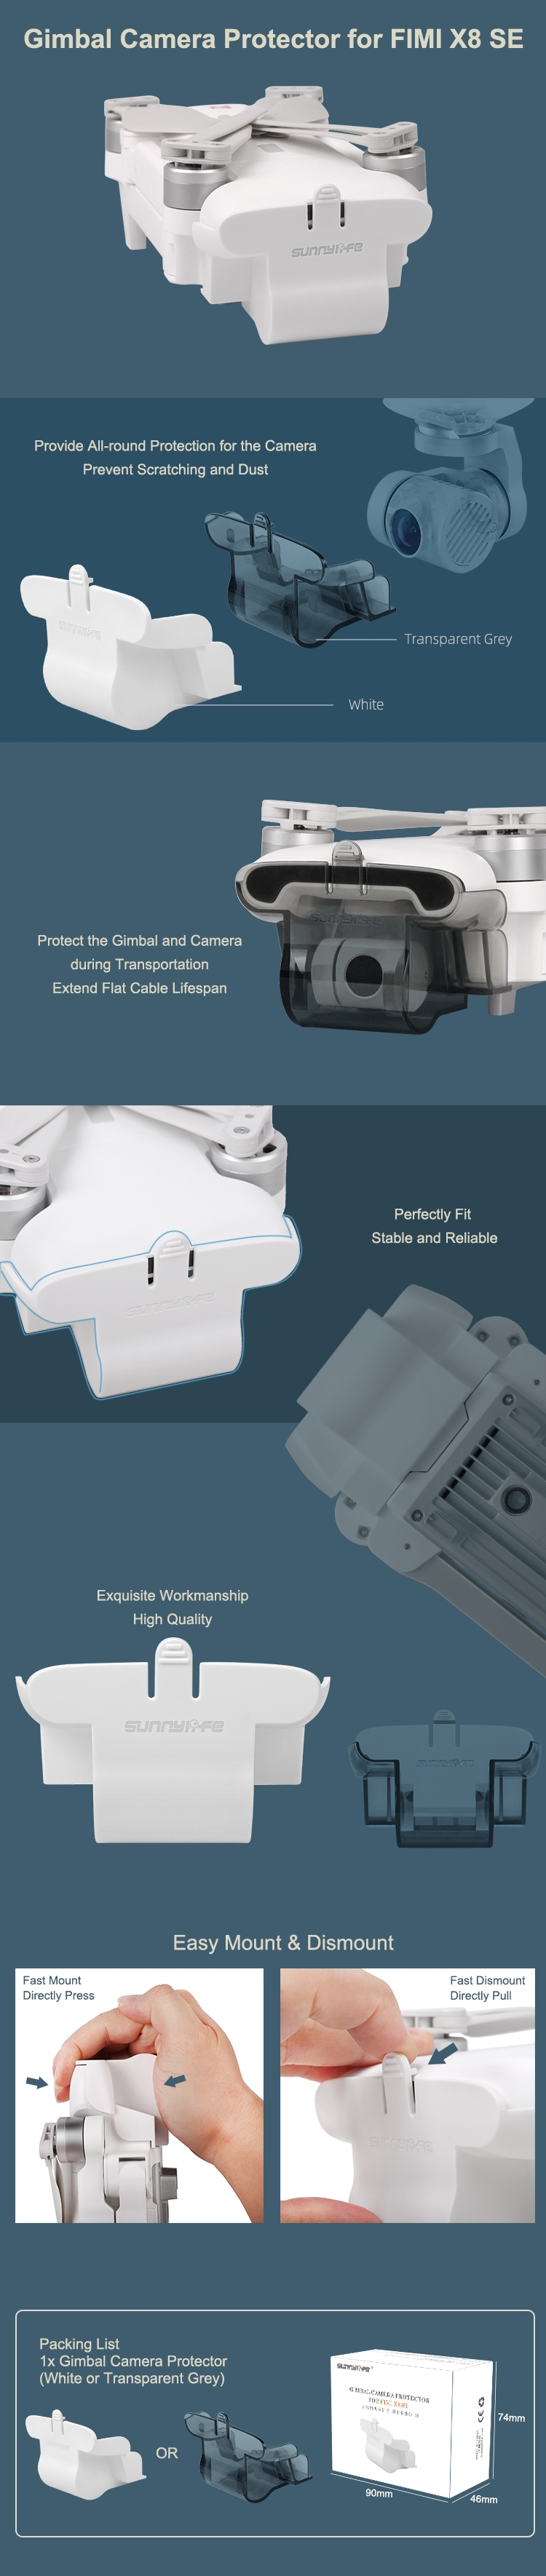 2PCS Sunnylife Gimbal Camera Protector White Cover XMI11 for Xiaomi FIMI X8 SE RC Quadcopter